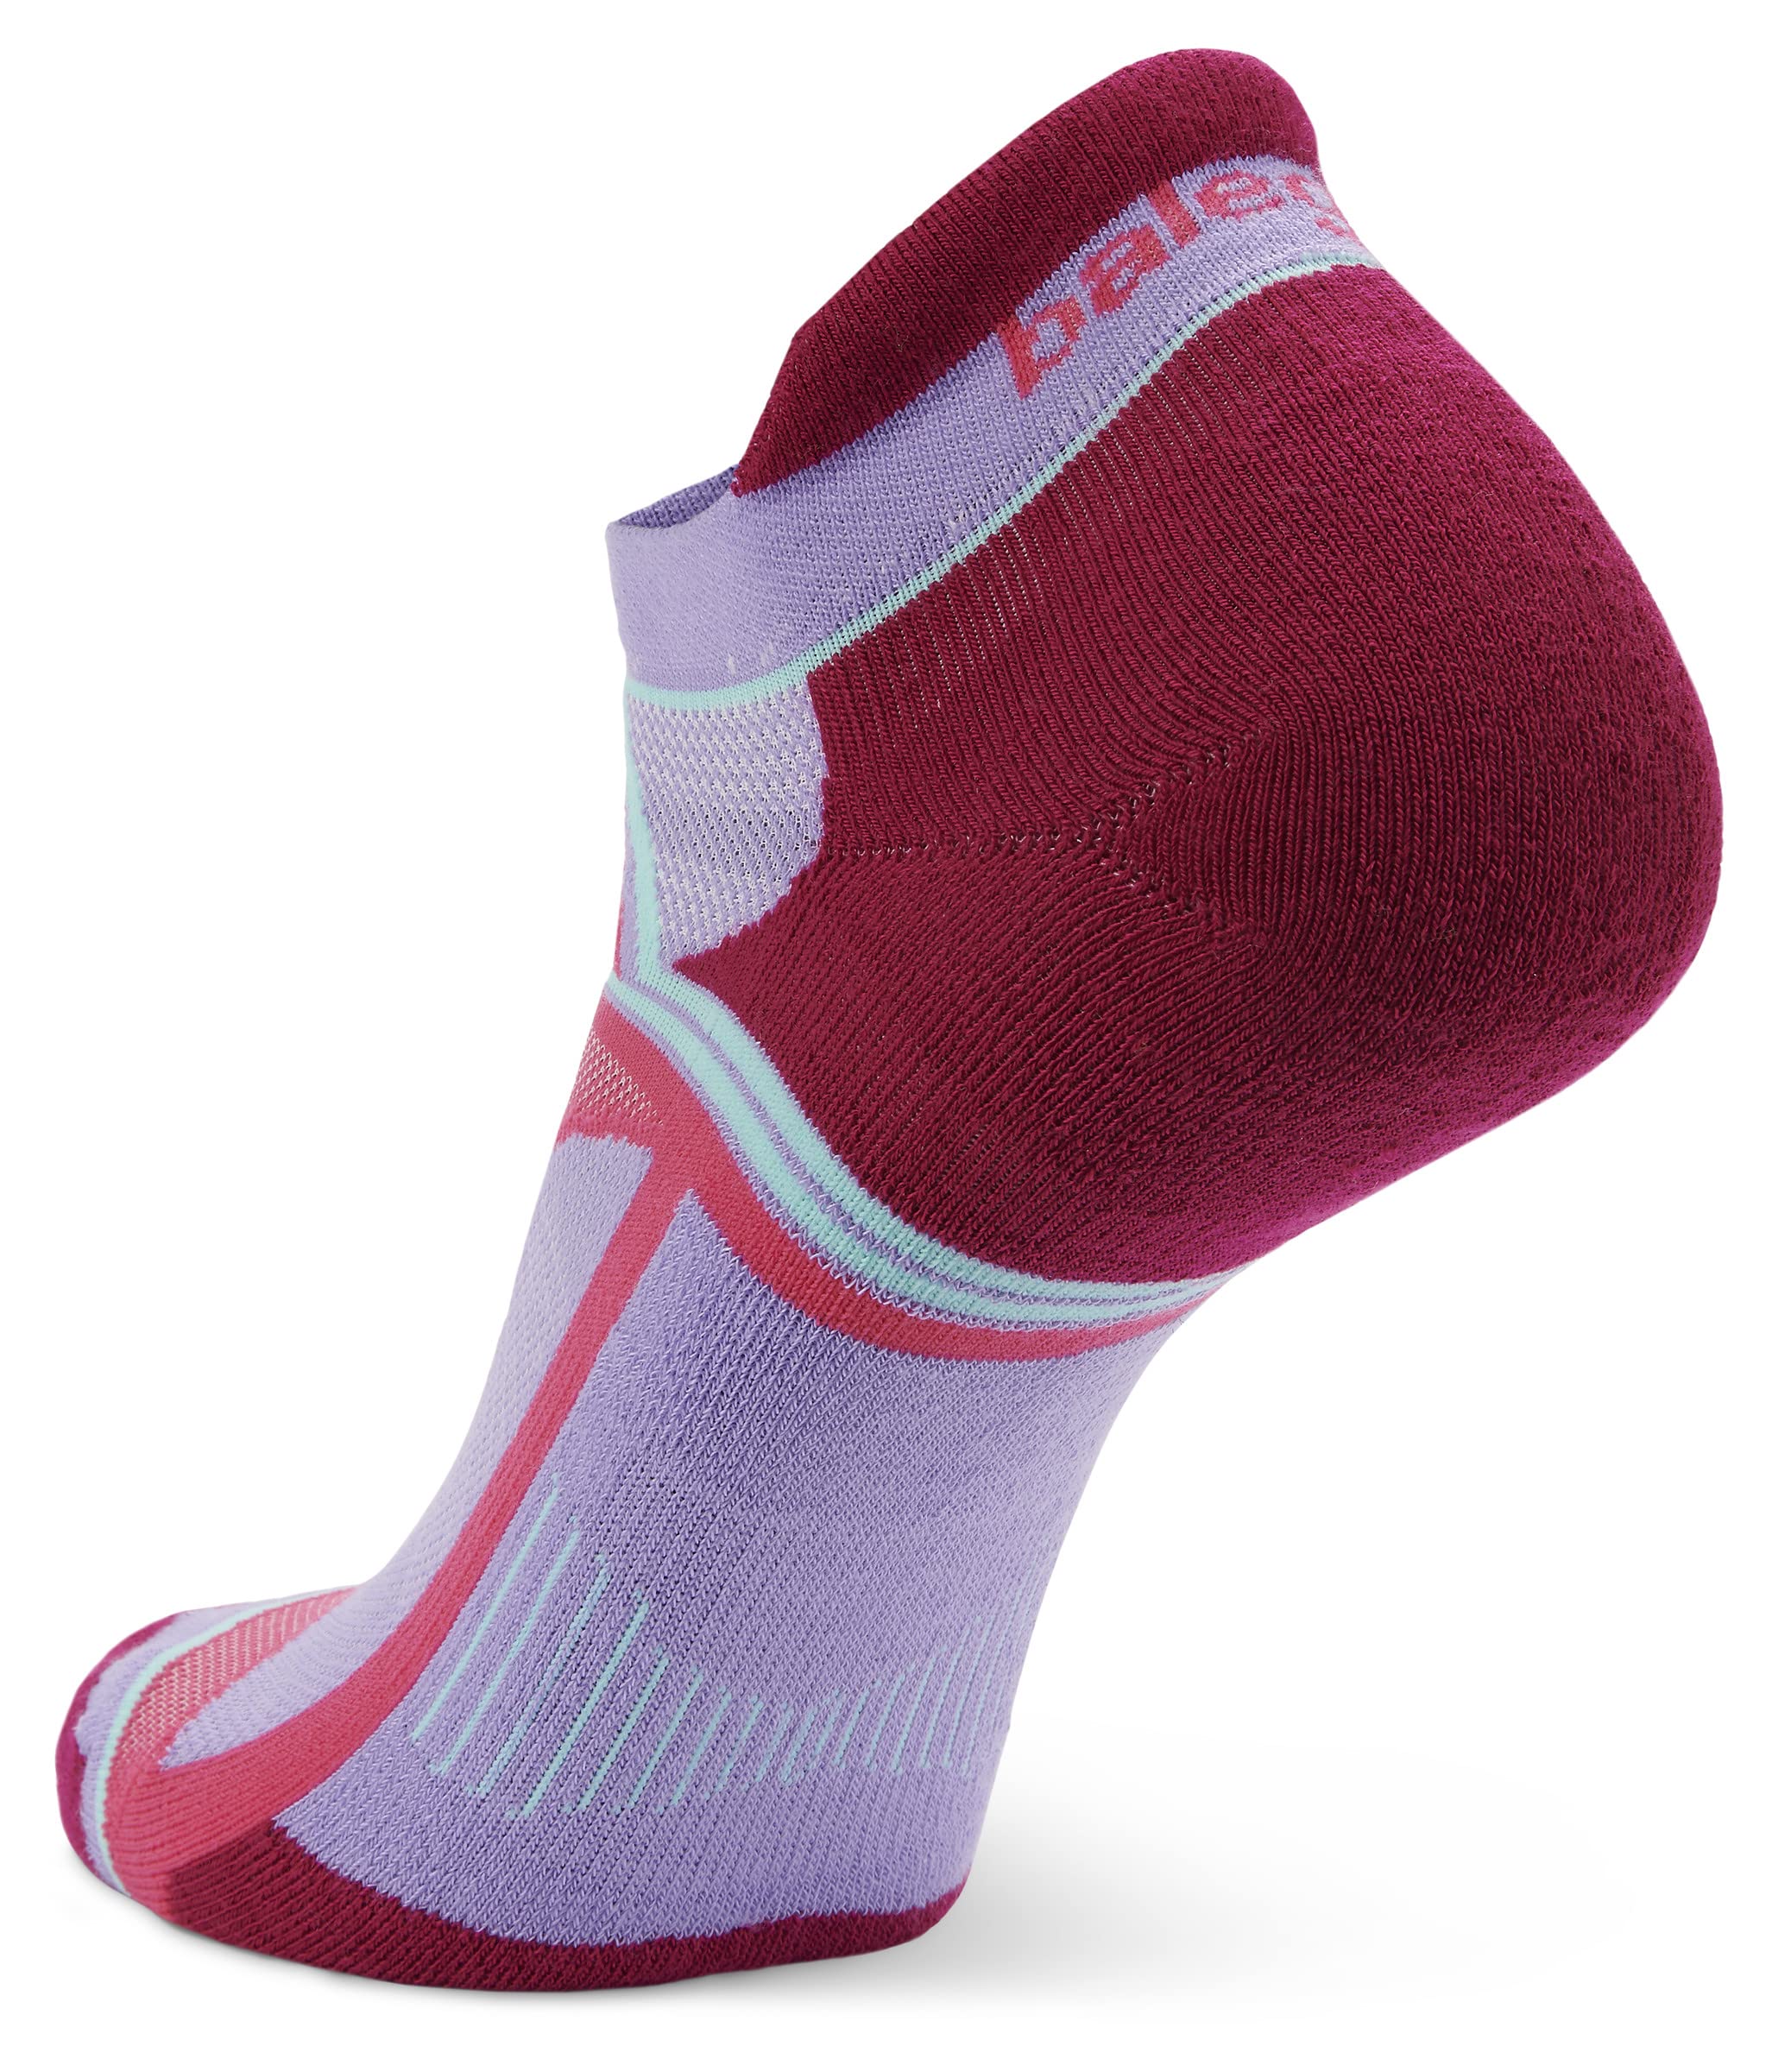 Balega Hidden Contour Impact Resistant/Cushioning Performance No Show Athletic Running Socks for Men & Women (1 Pair)